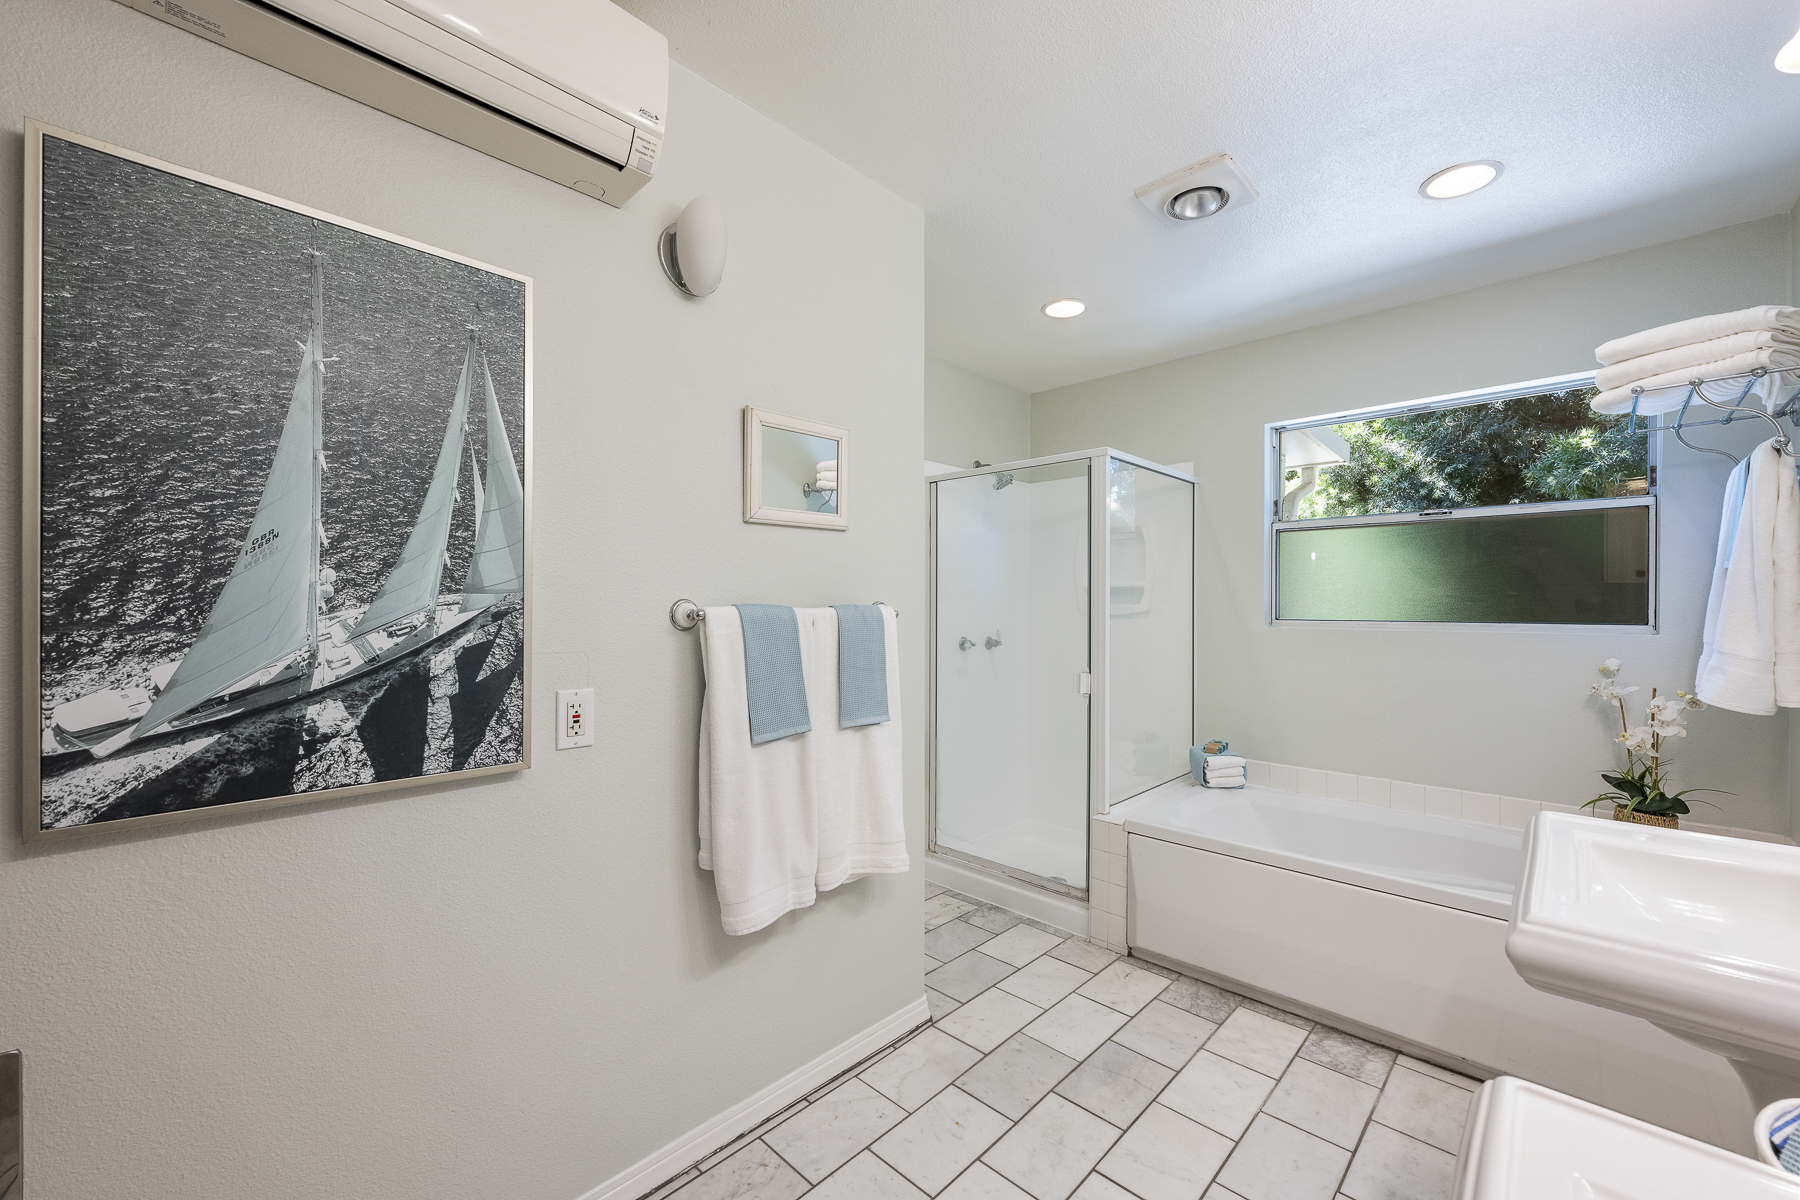 411 Truman Ave, Fullerton, CA 92832: Bathroom view with corner shower.